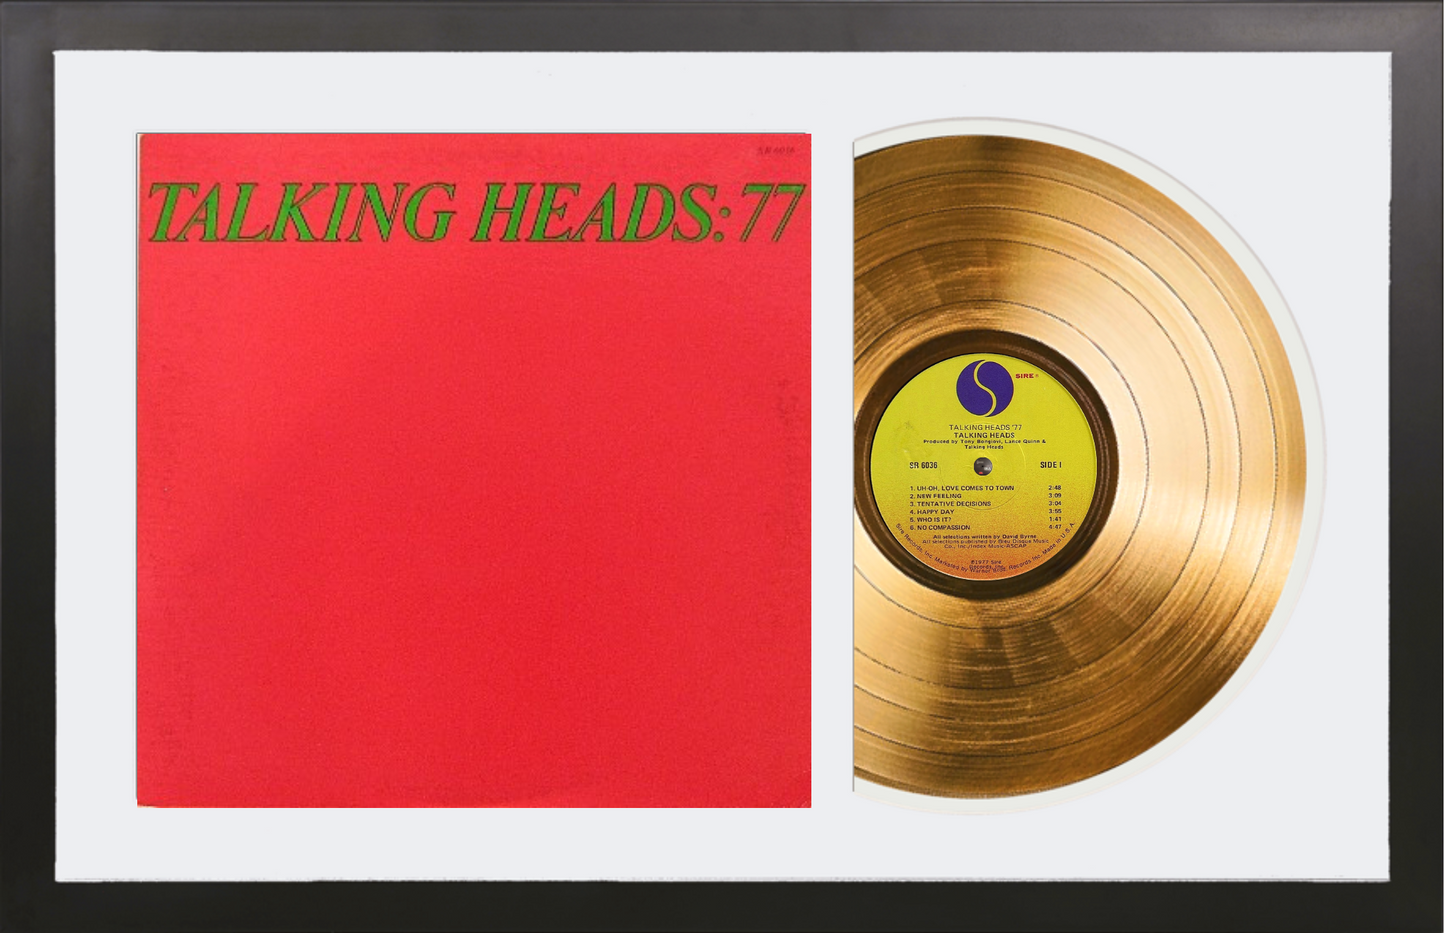 Talking Heads - Talking Heads: 77 - 14K Gold Framed Album